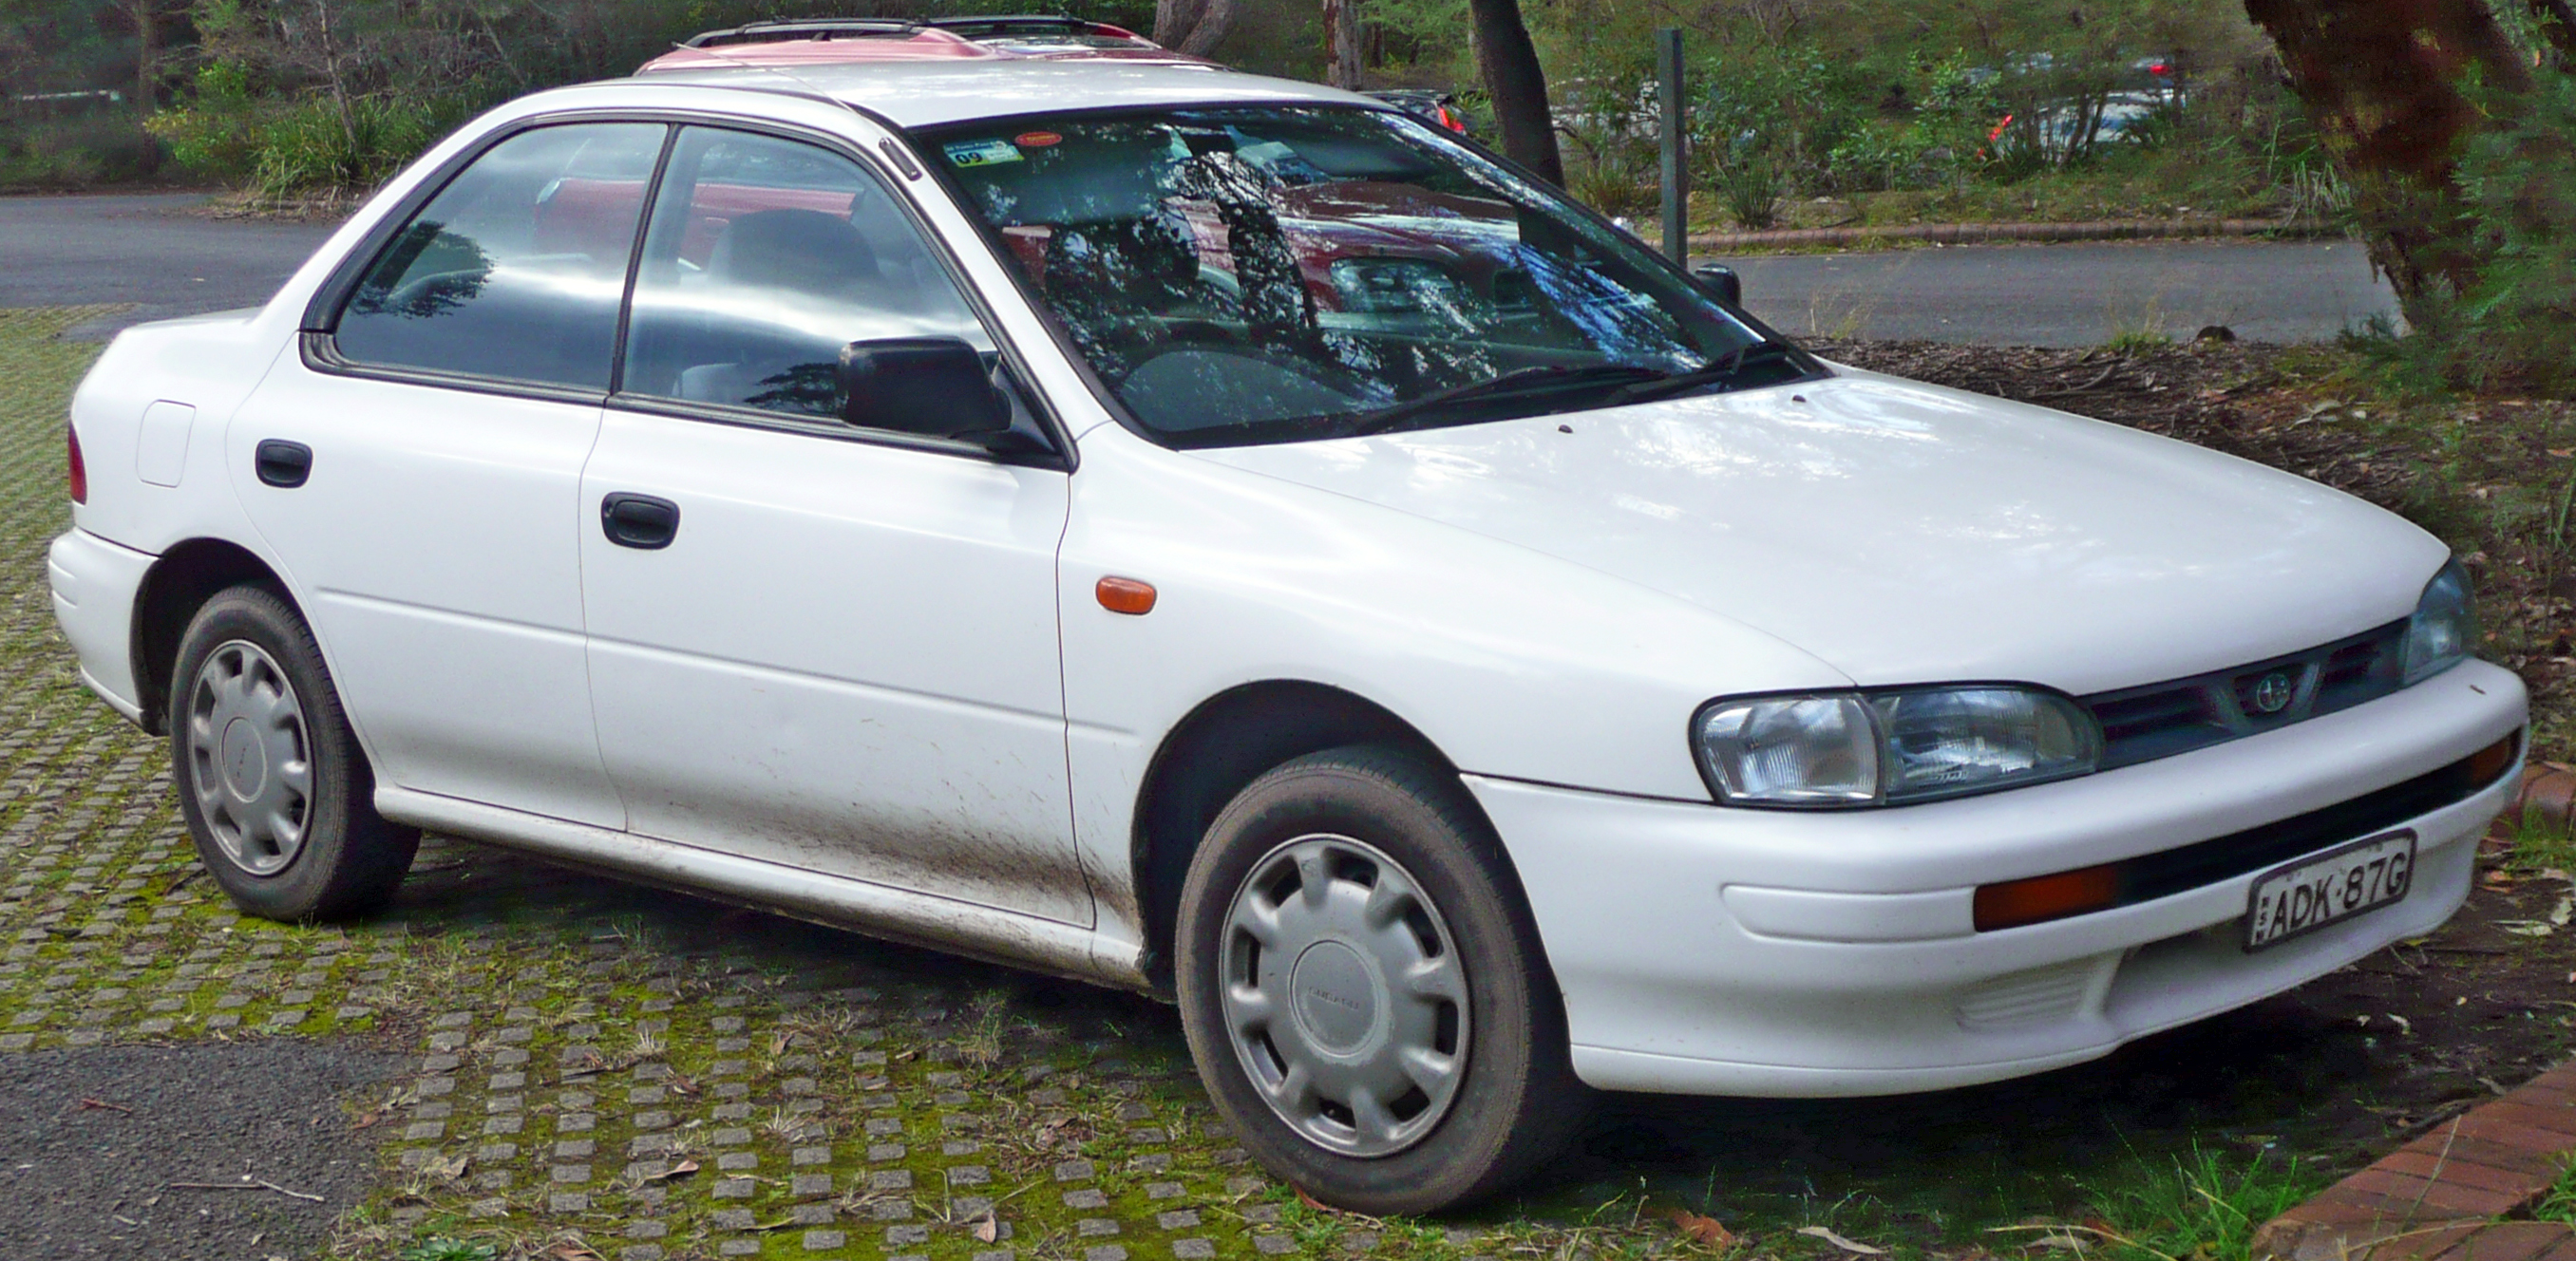 File:1995 Subaru Impreza (Gc5) Gx 2Wd Sedan (2009-07-22) 01.Jpg - Wikimedia Commons